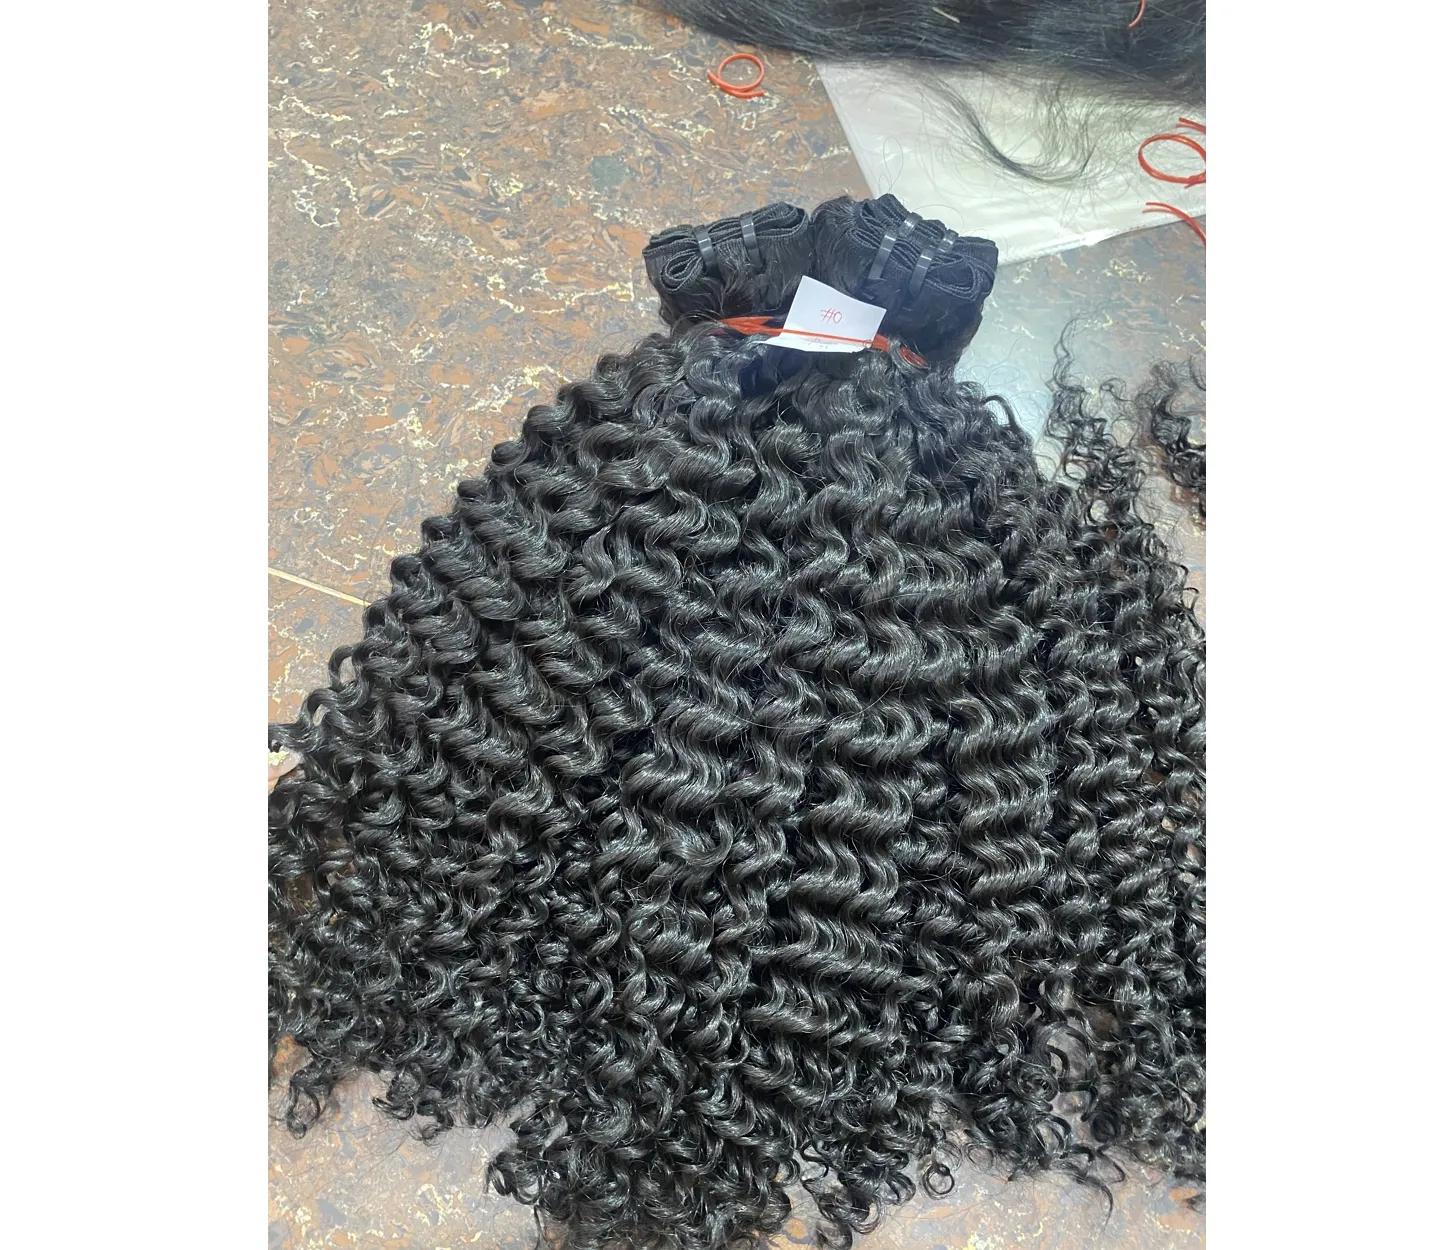 100 Human Hair Extension Raw Indian Hair Bundle,Remy Natural Hair Extension,Raw Hair Vendor Unprocessed Virgin Indian Hair